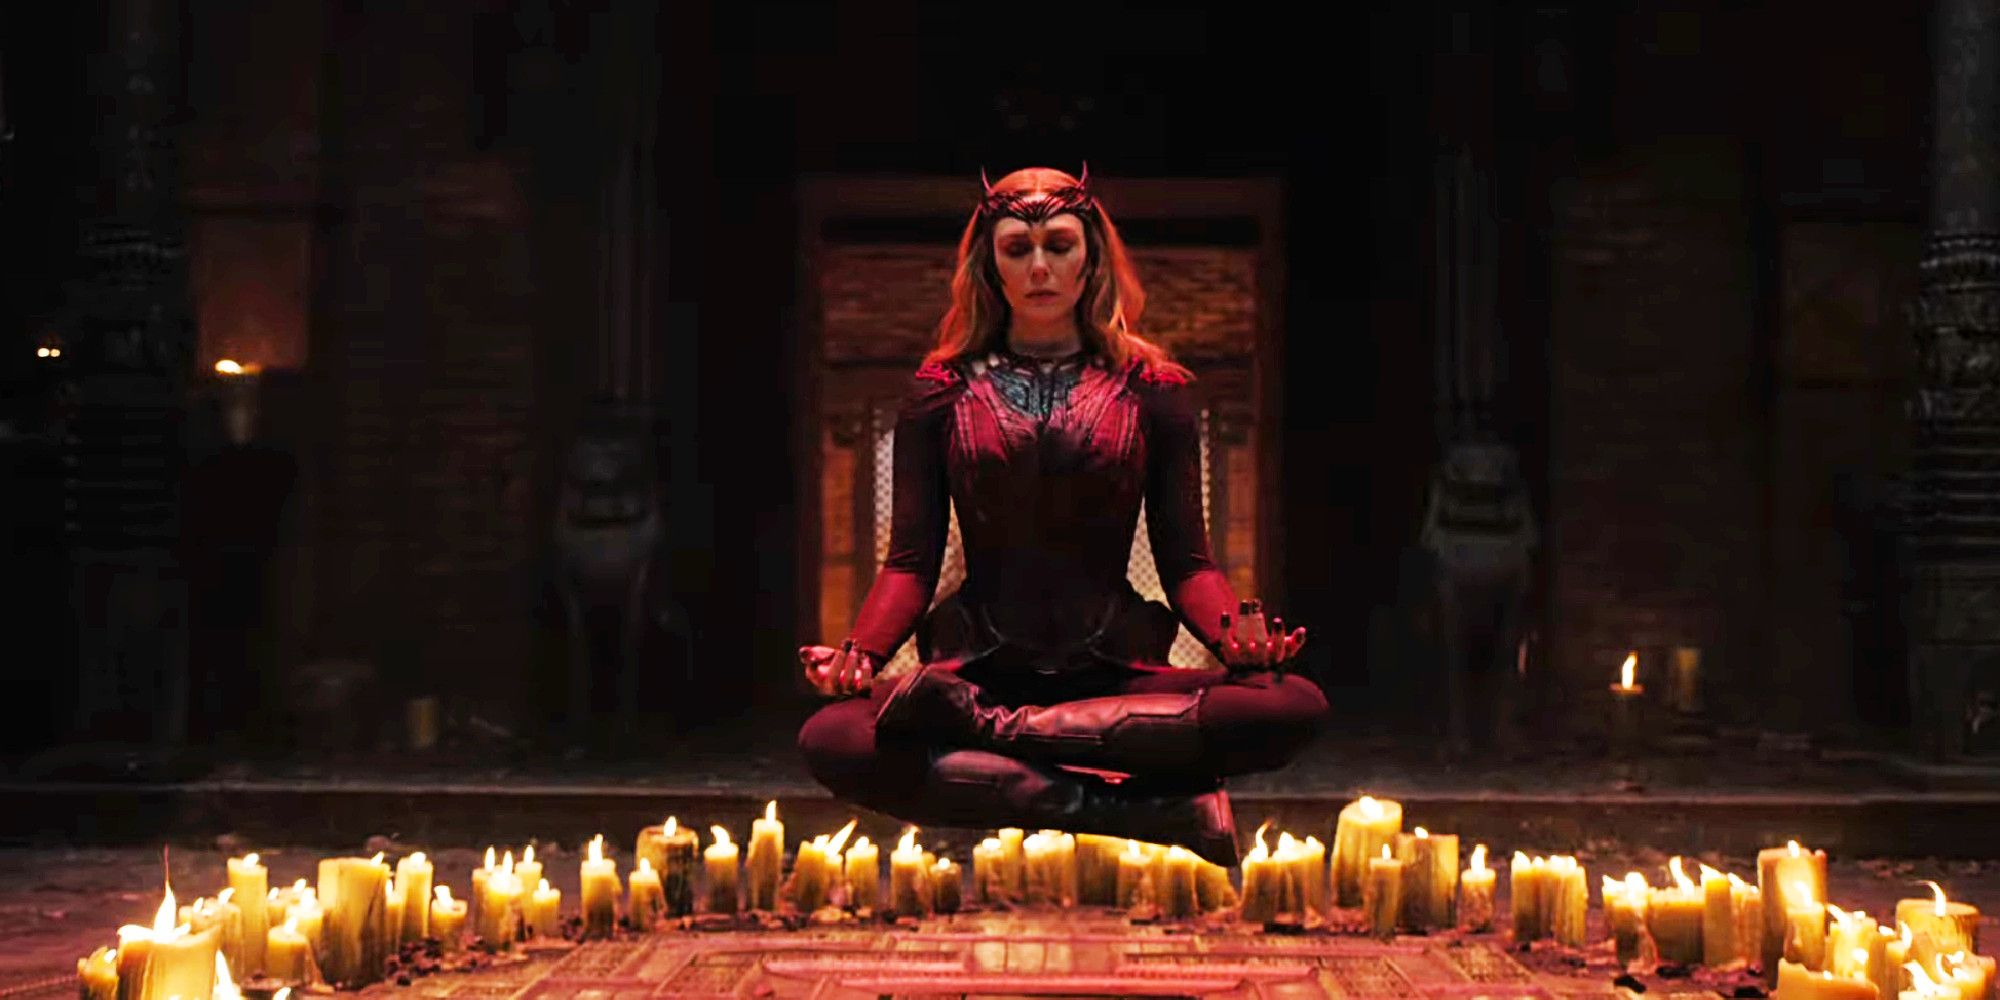 Wanda levitates in a magic circle in Dr. Strange 2.